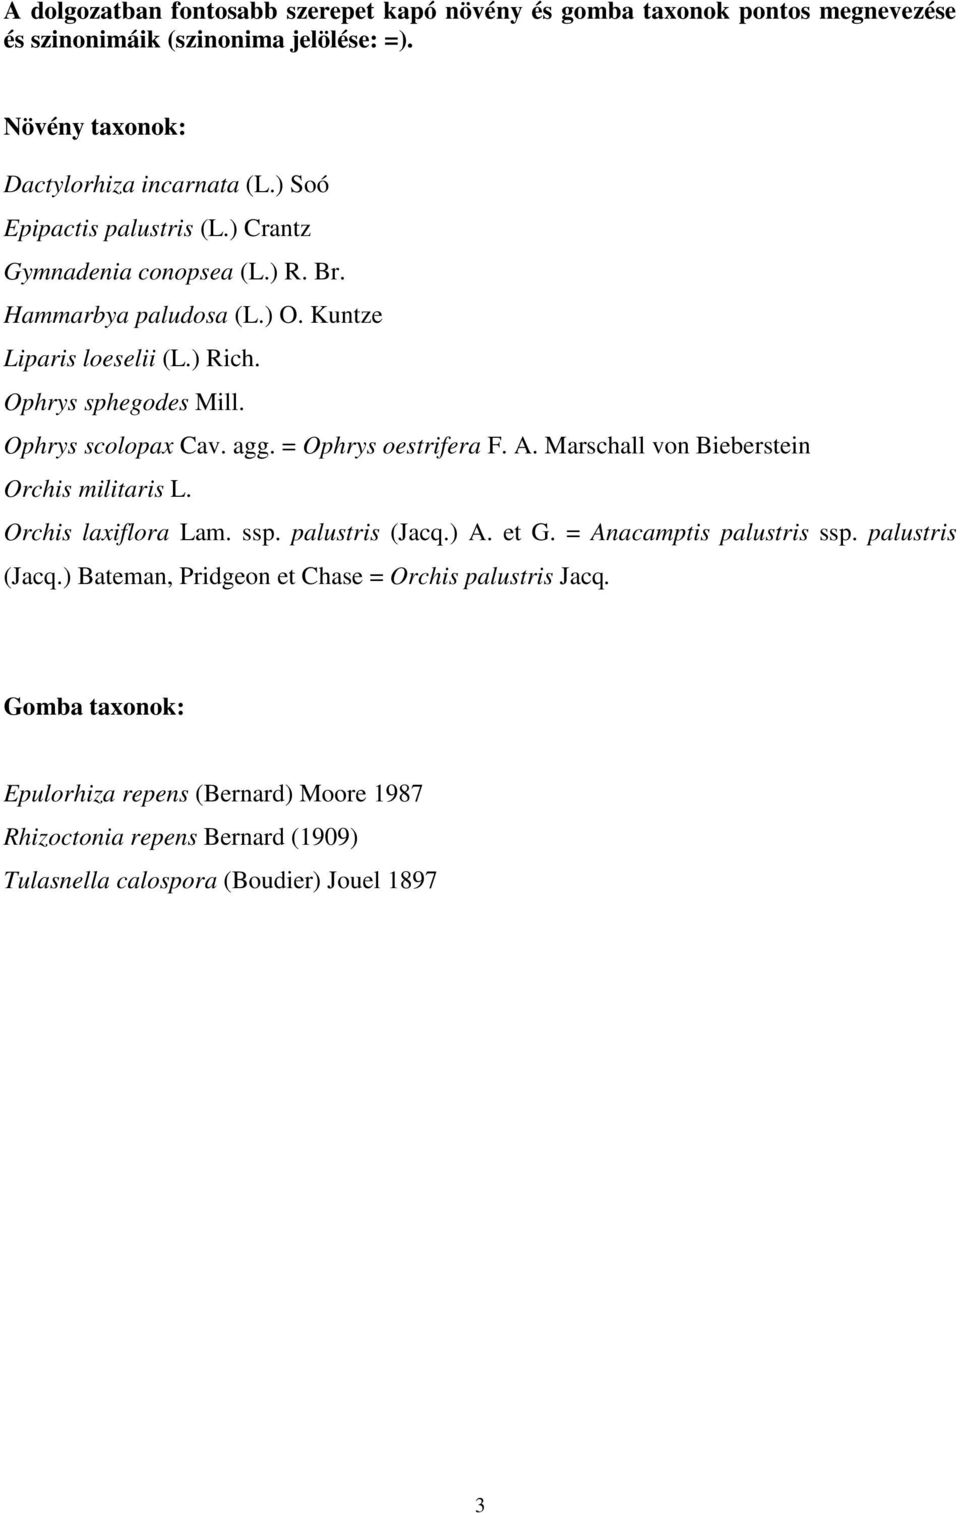 agg. = Ophrys oestrifera F. A. Marschall von Bieberstein Orchis militaris L. Orchis laxiflora Lam. ssp. palustris (Jacq.) A. et G. = Anacamptis palustris ssp. palustris (Jacq.) Bateman, Pridgeon et Chase = Orchis palustris Jacq.